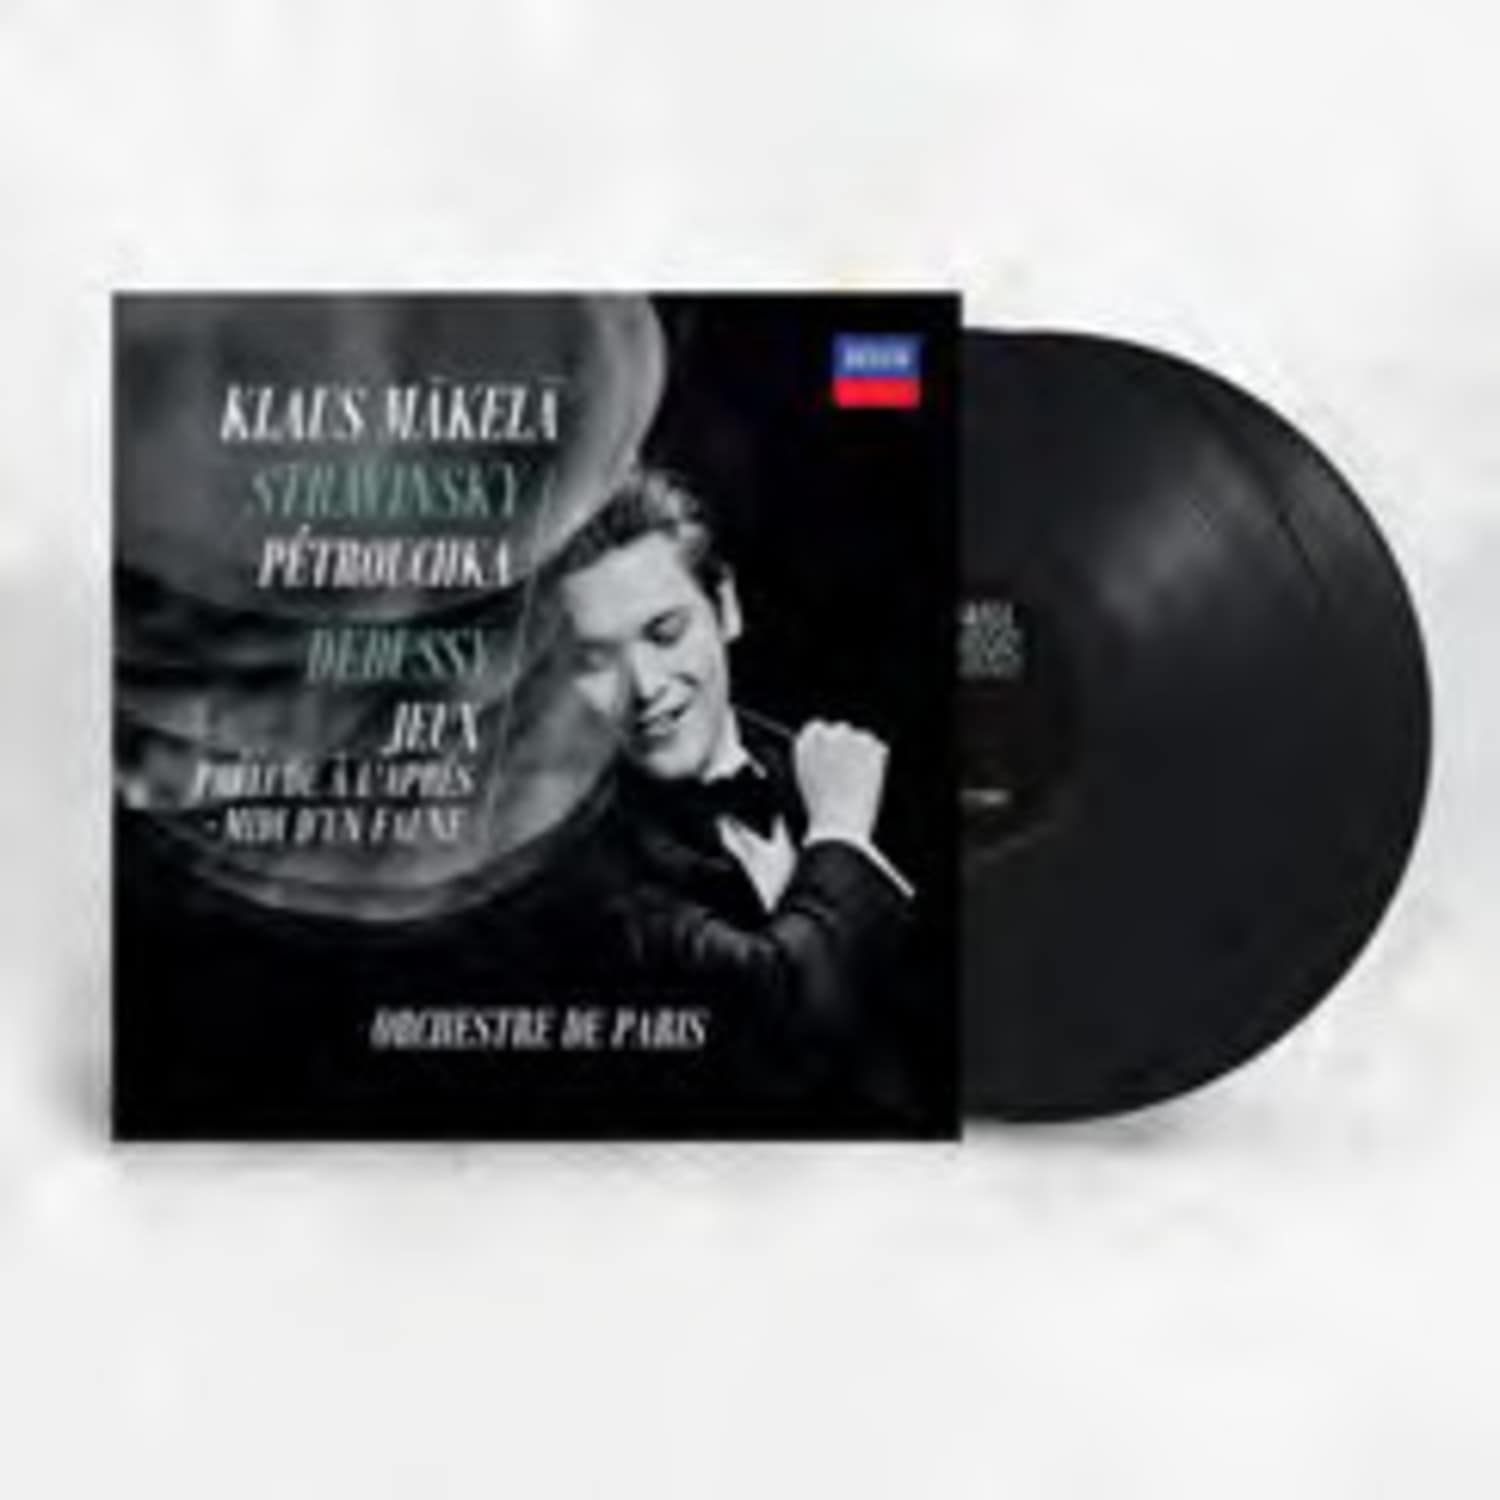 Klaus Mkel / Orchestre de Paris - STRAVINSKY PETROUCHKA & DEBUSSY 